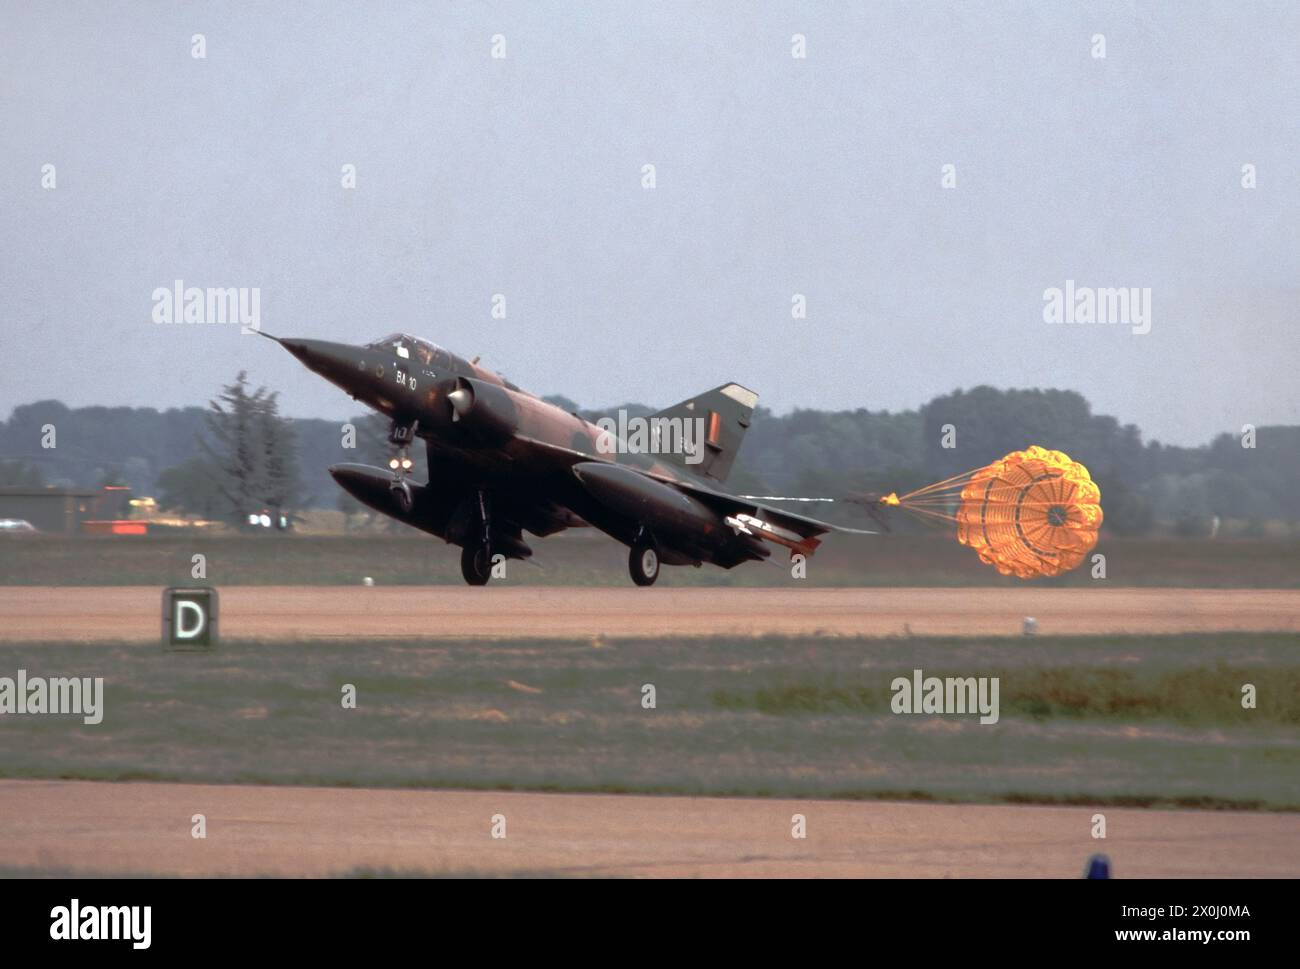 - Aereo da attacco supersonico Dassault Mirage 5 della Aviazione Militare Belga - Dassault Mirage 5 avion d'attaque supersonique de l'armée de l'air belge. Banque D'Images